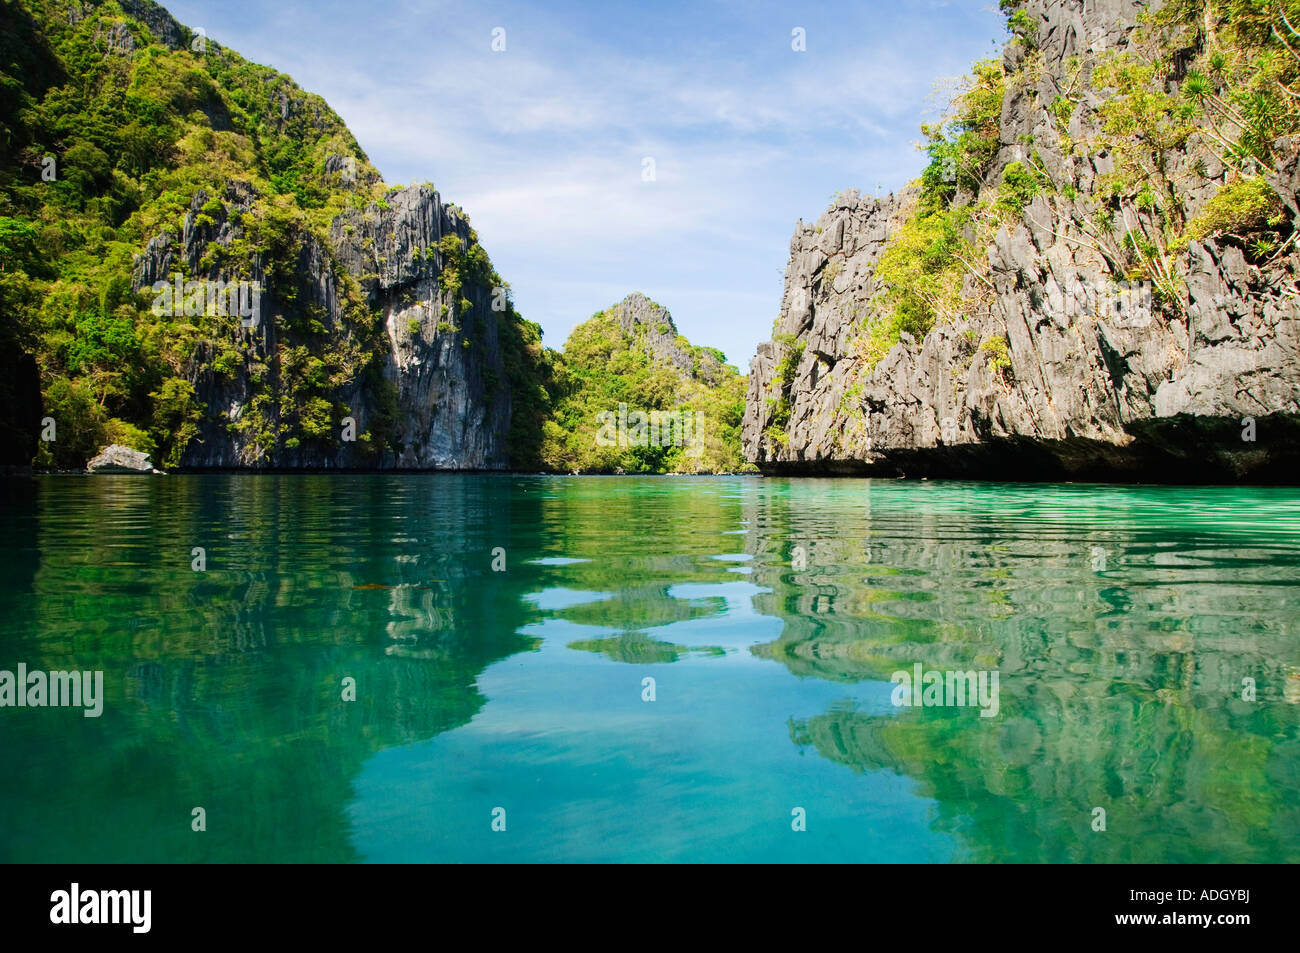 Philippines Luzon Palawan Province El Nido Town Bacuit Bay Miniloc